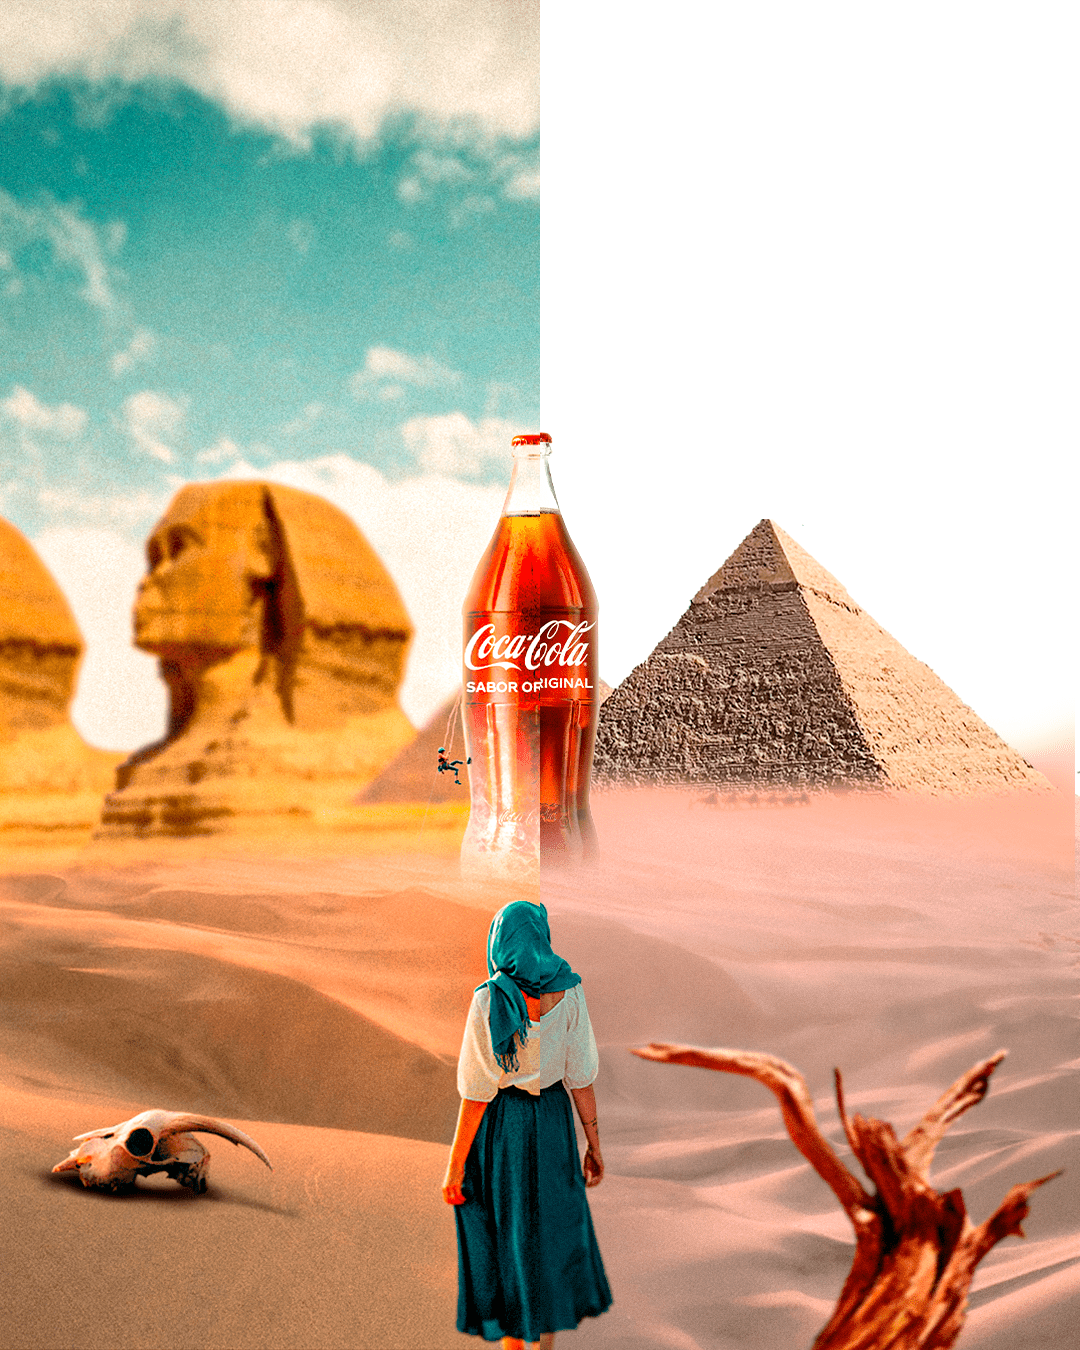 Coca Cola photoshop manipulation art artwork digital illustration